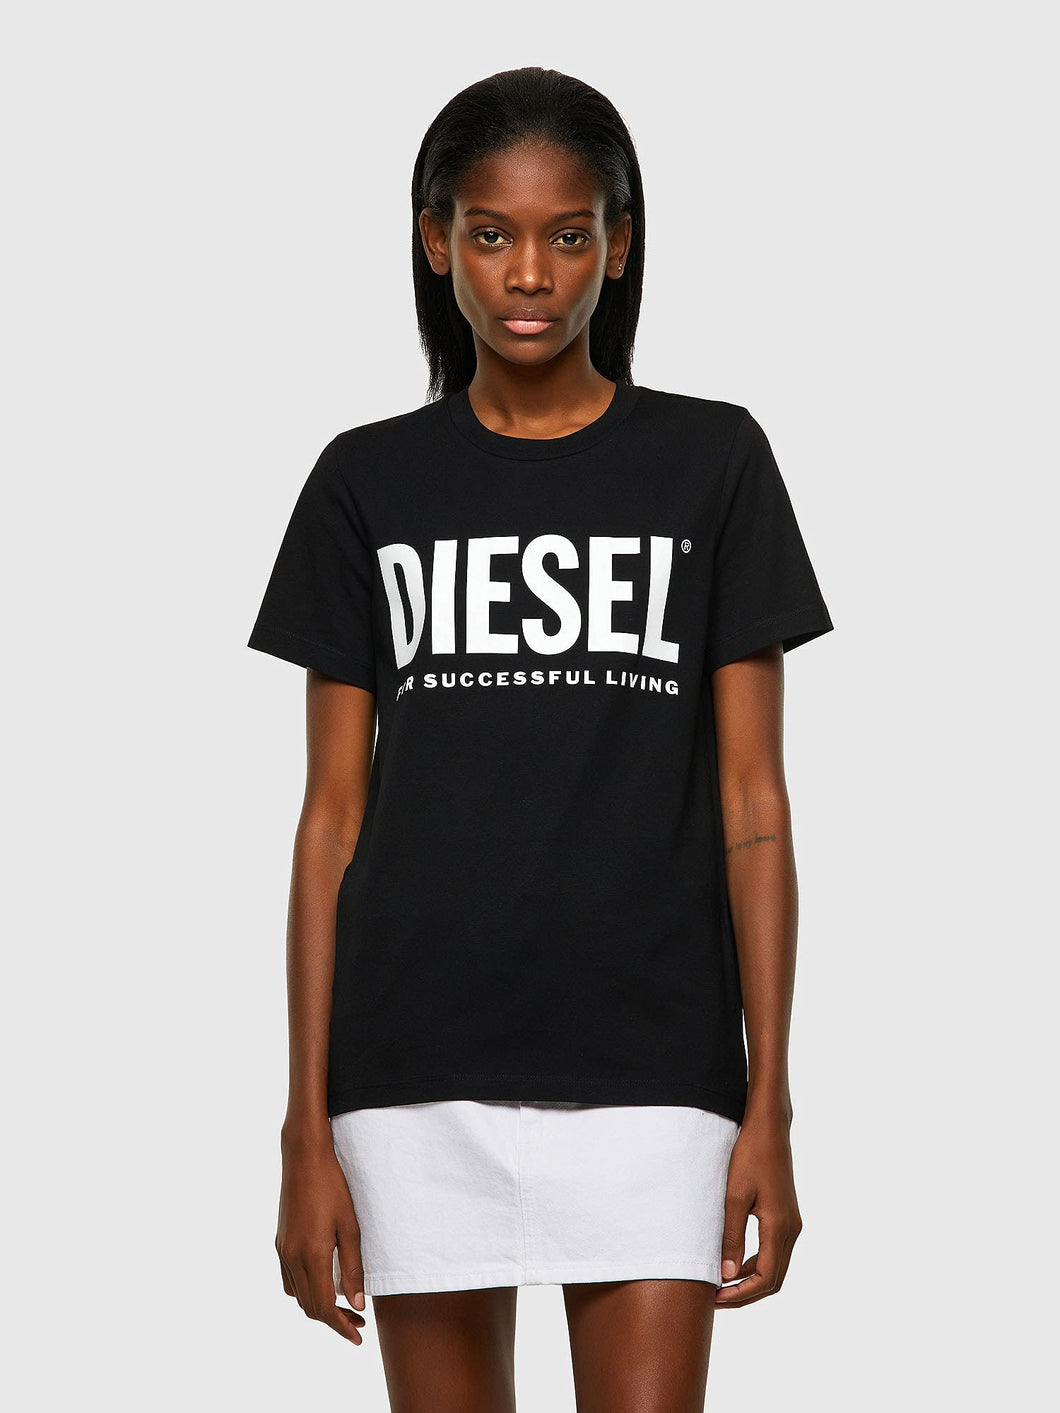 Diesel A04685 0AAXJ - T-SILYECOLOGO T-Shirt Donna Black S